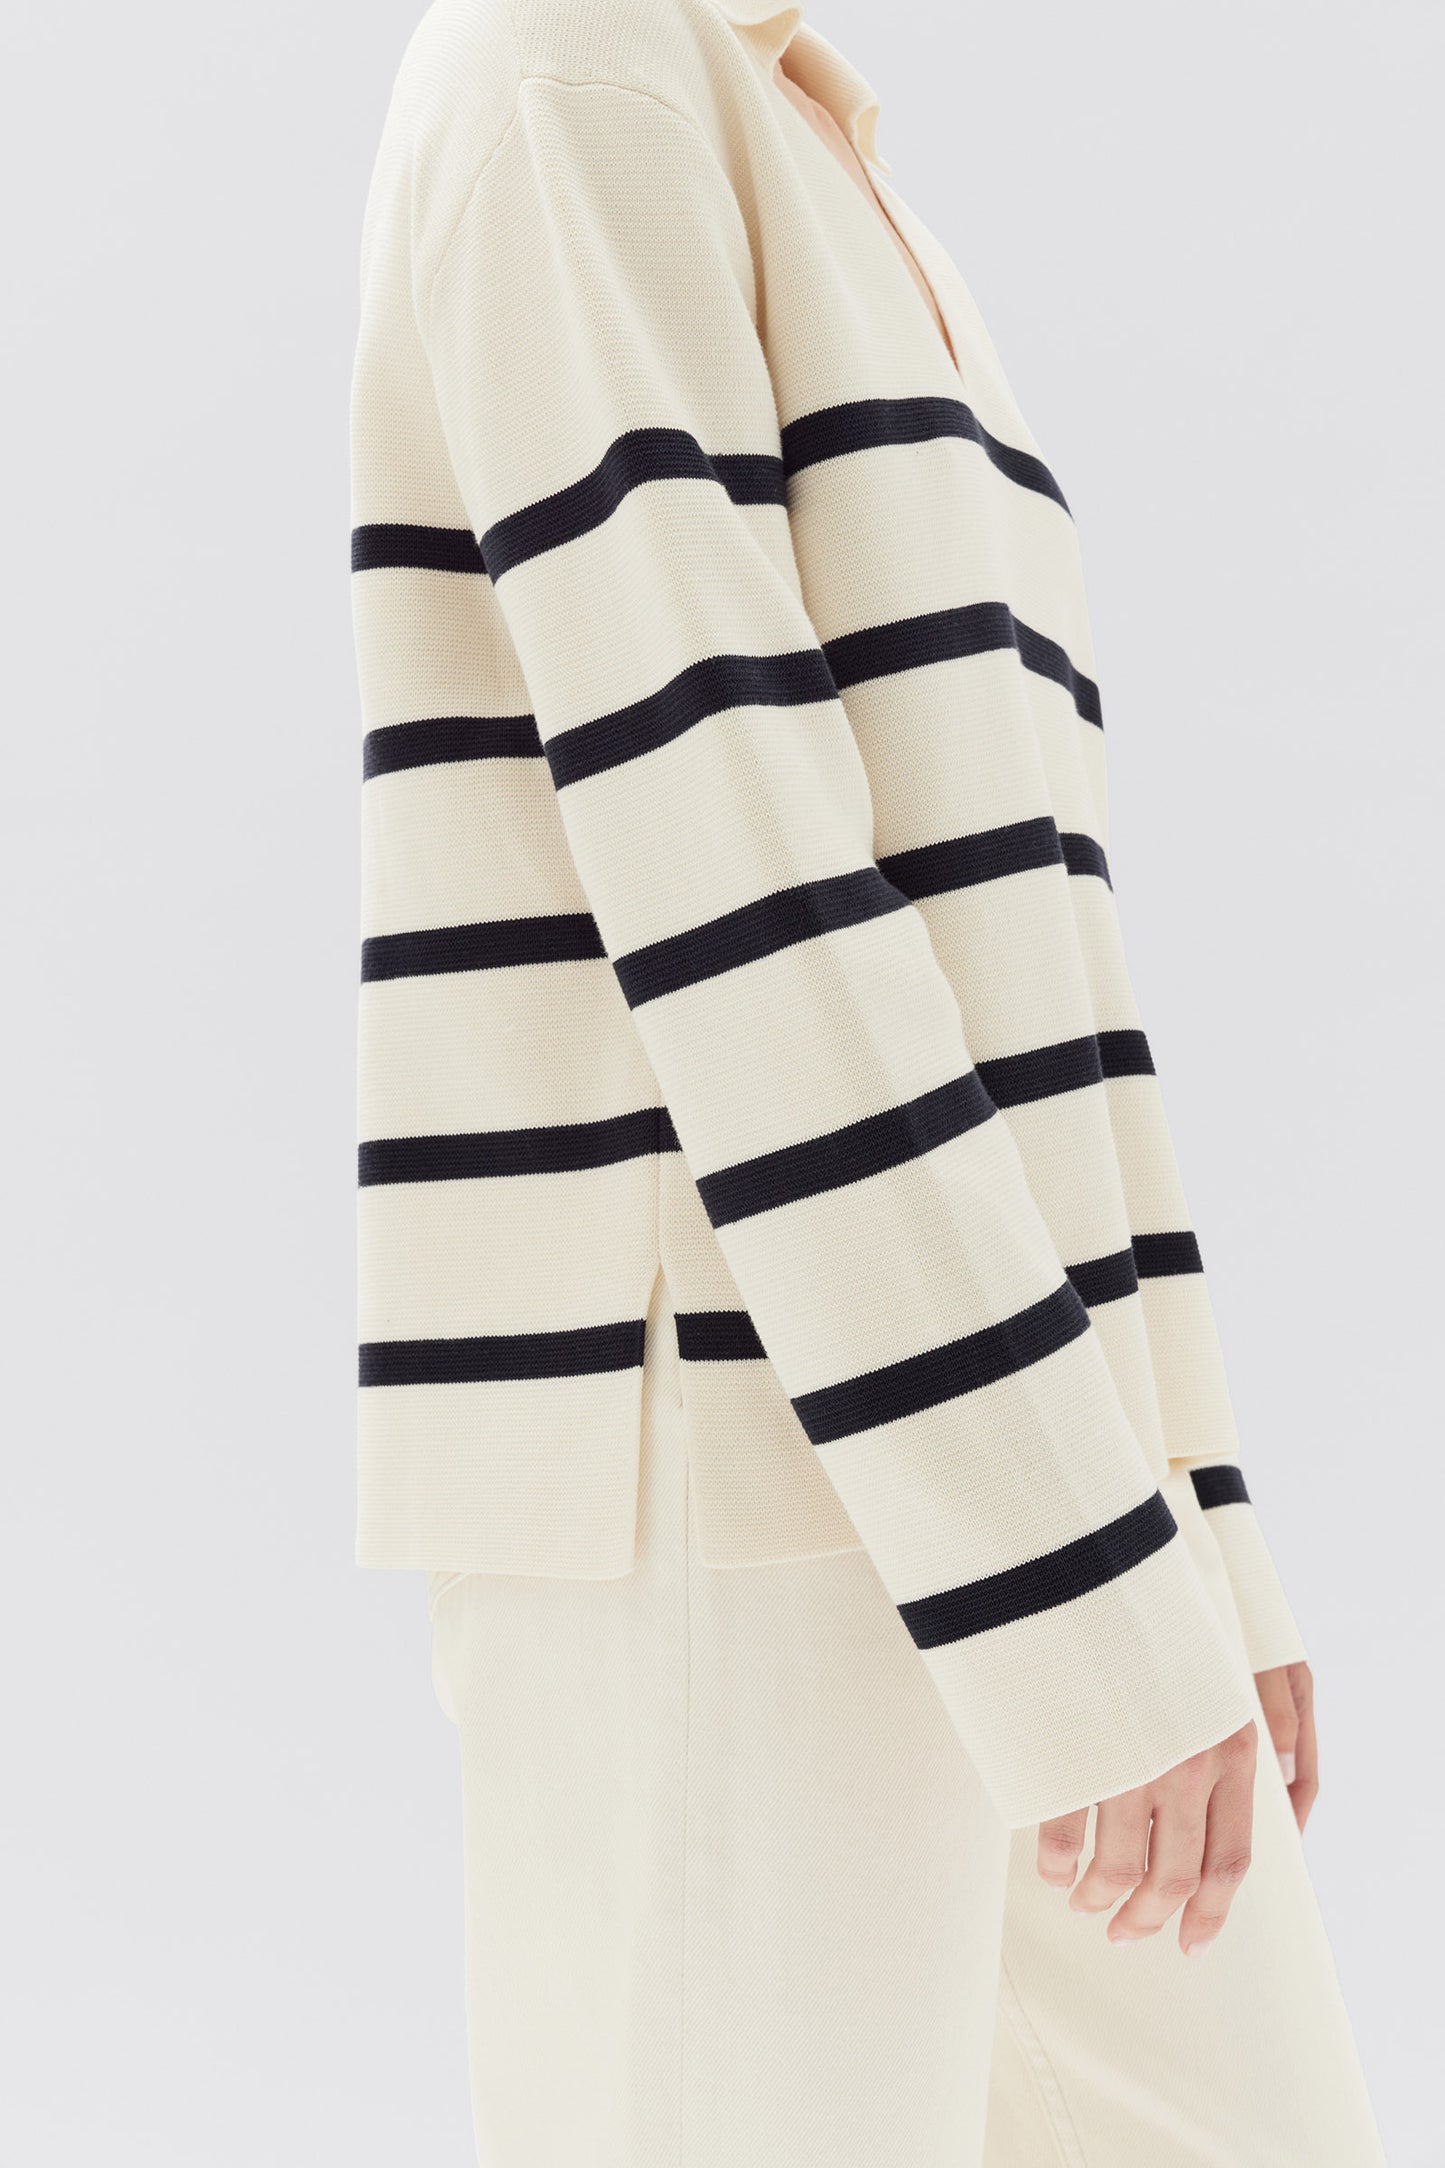 ASSEMBLY LABEL // Parisienne Stripe Knit Polo TRUE NAVY STRIPE